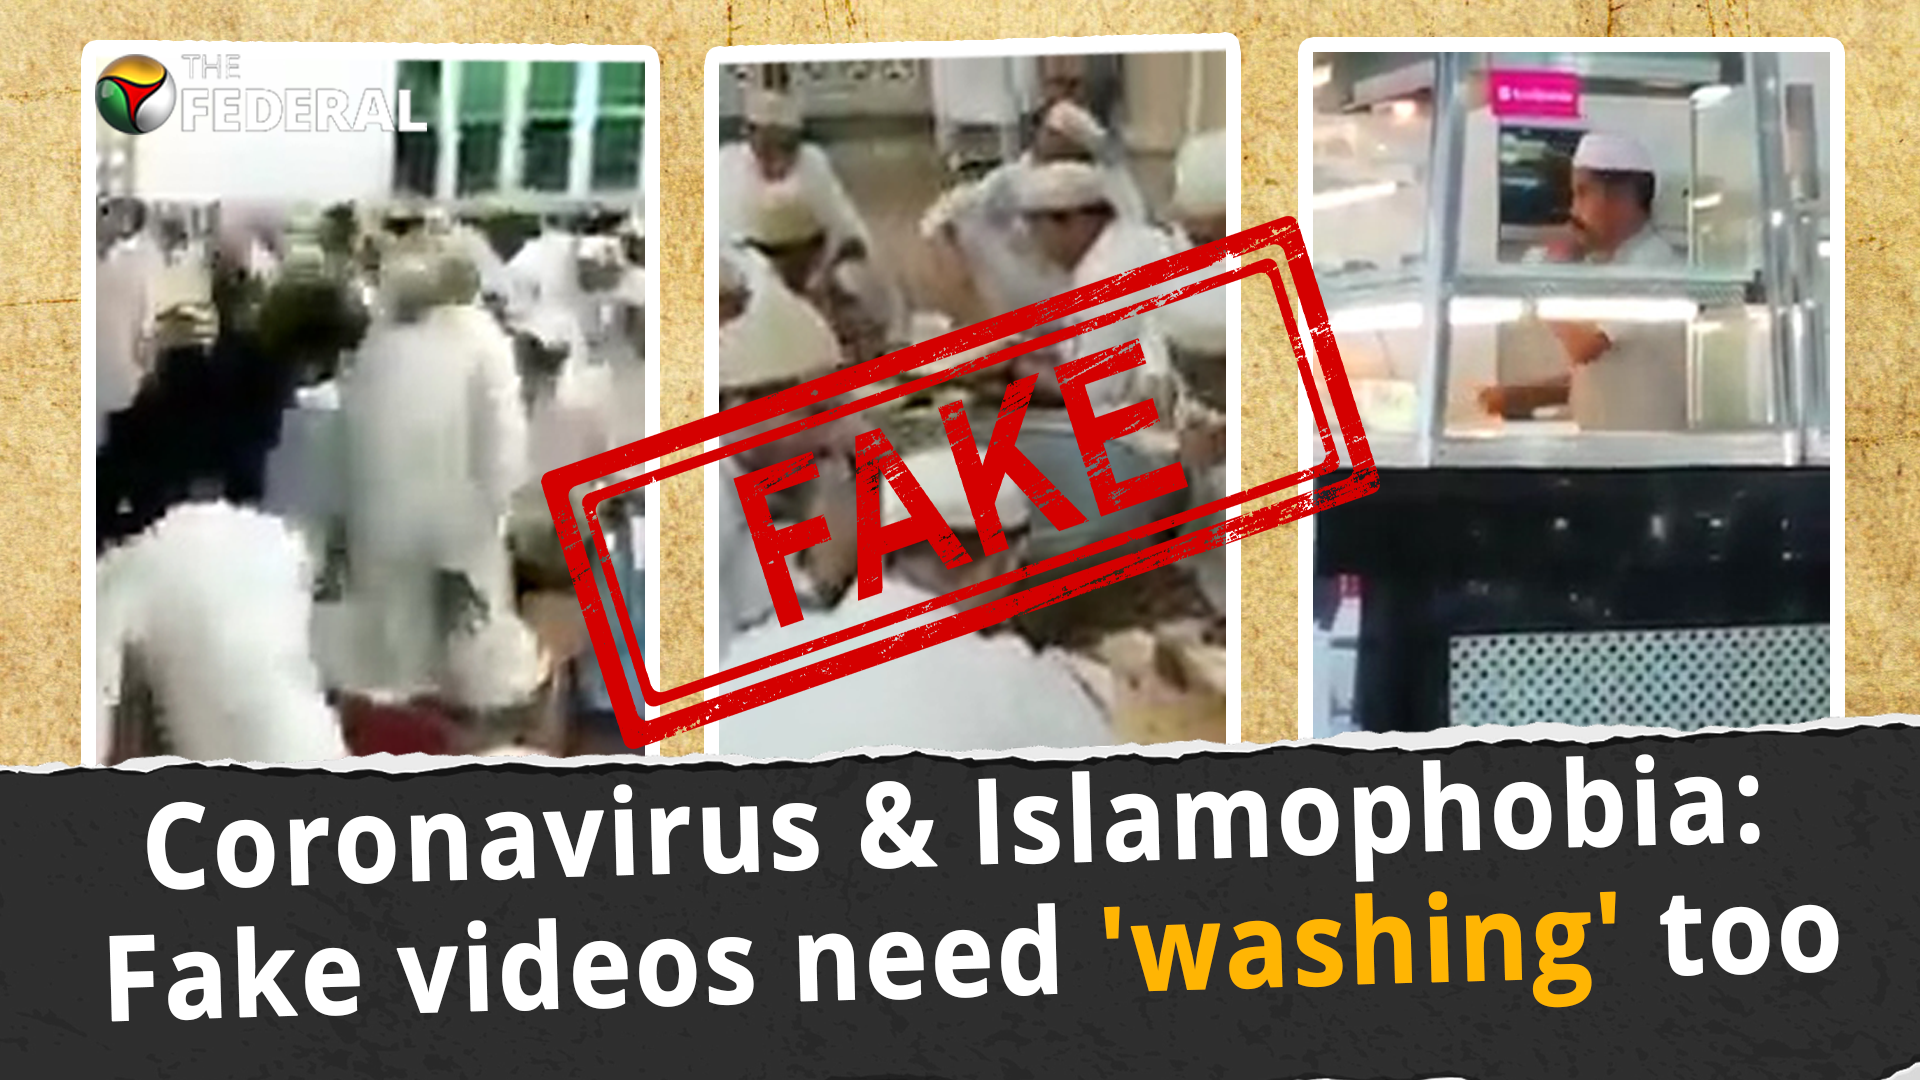 Coronavirus & Islamophobia: Fake videos need washing too